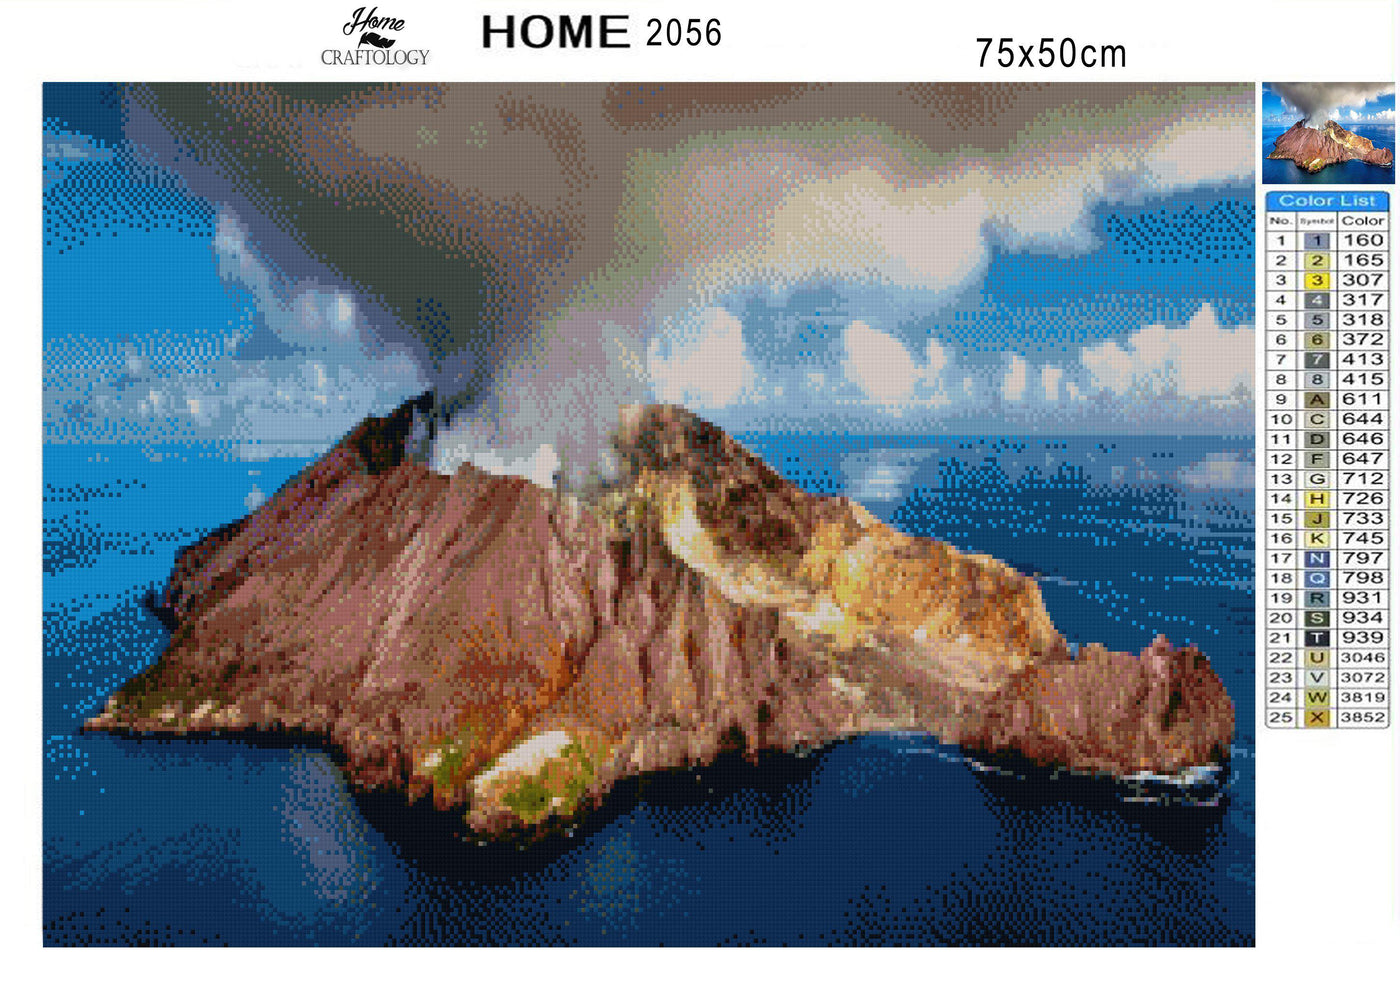 White Island Volcano - Premium Diamond Painting Kit